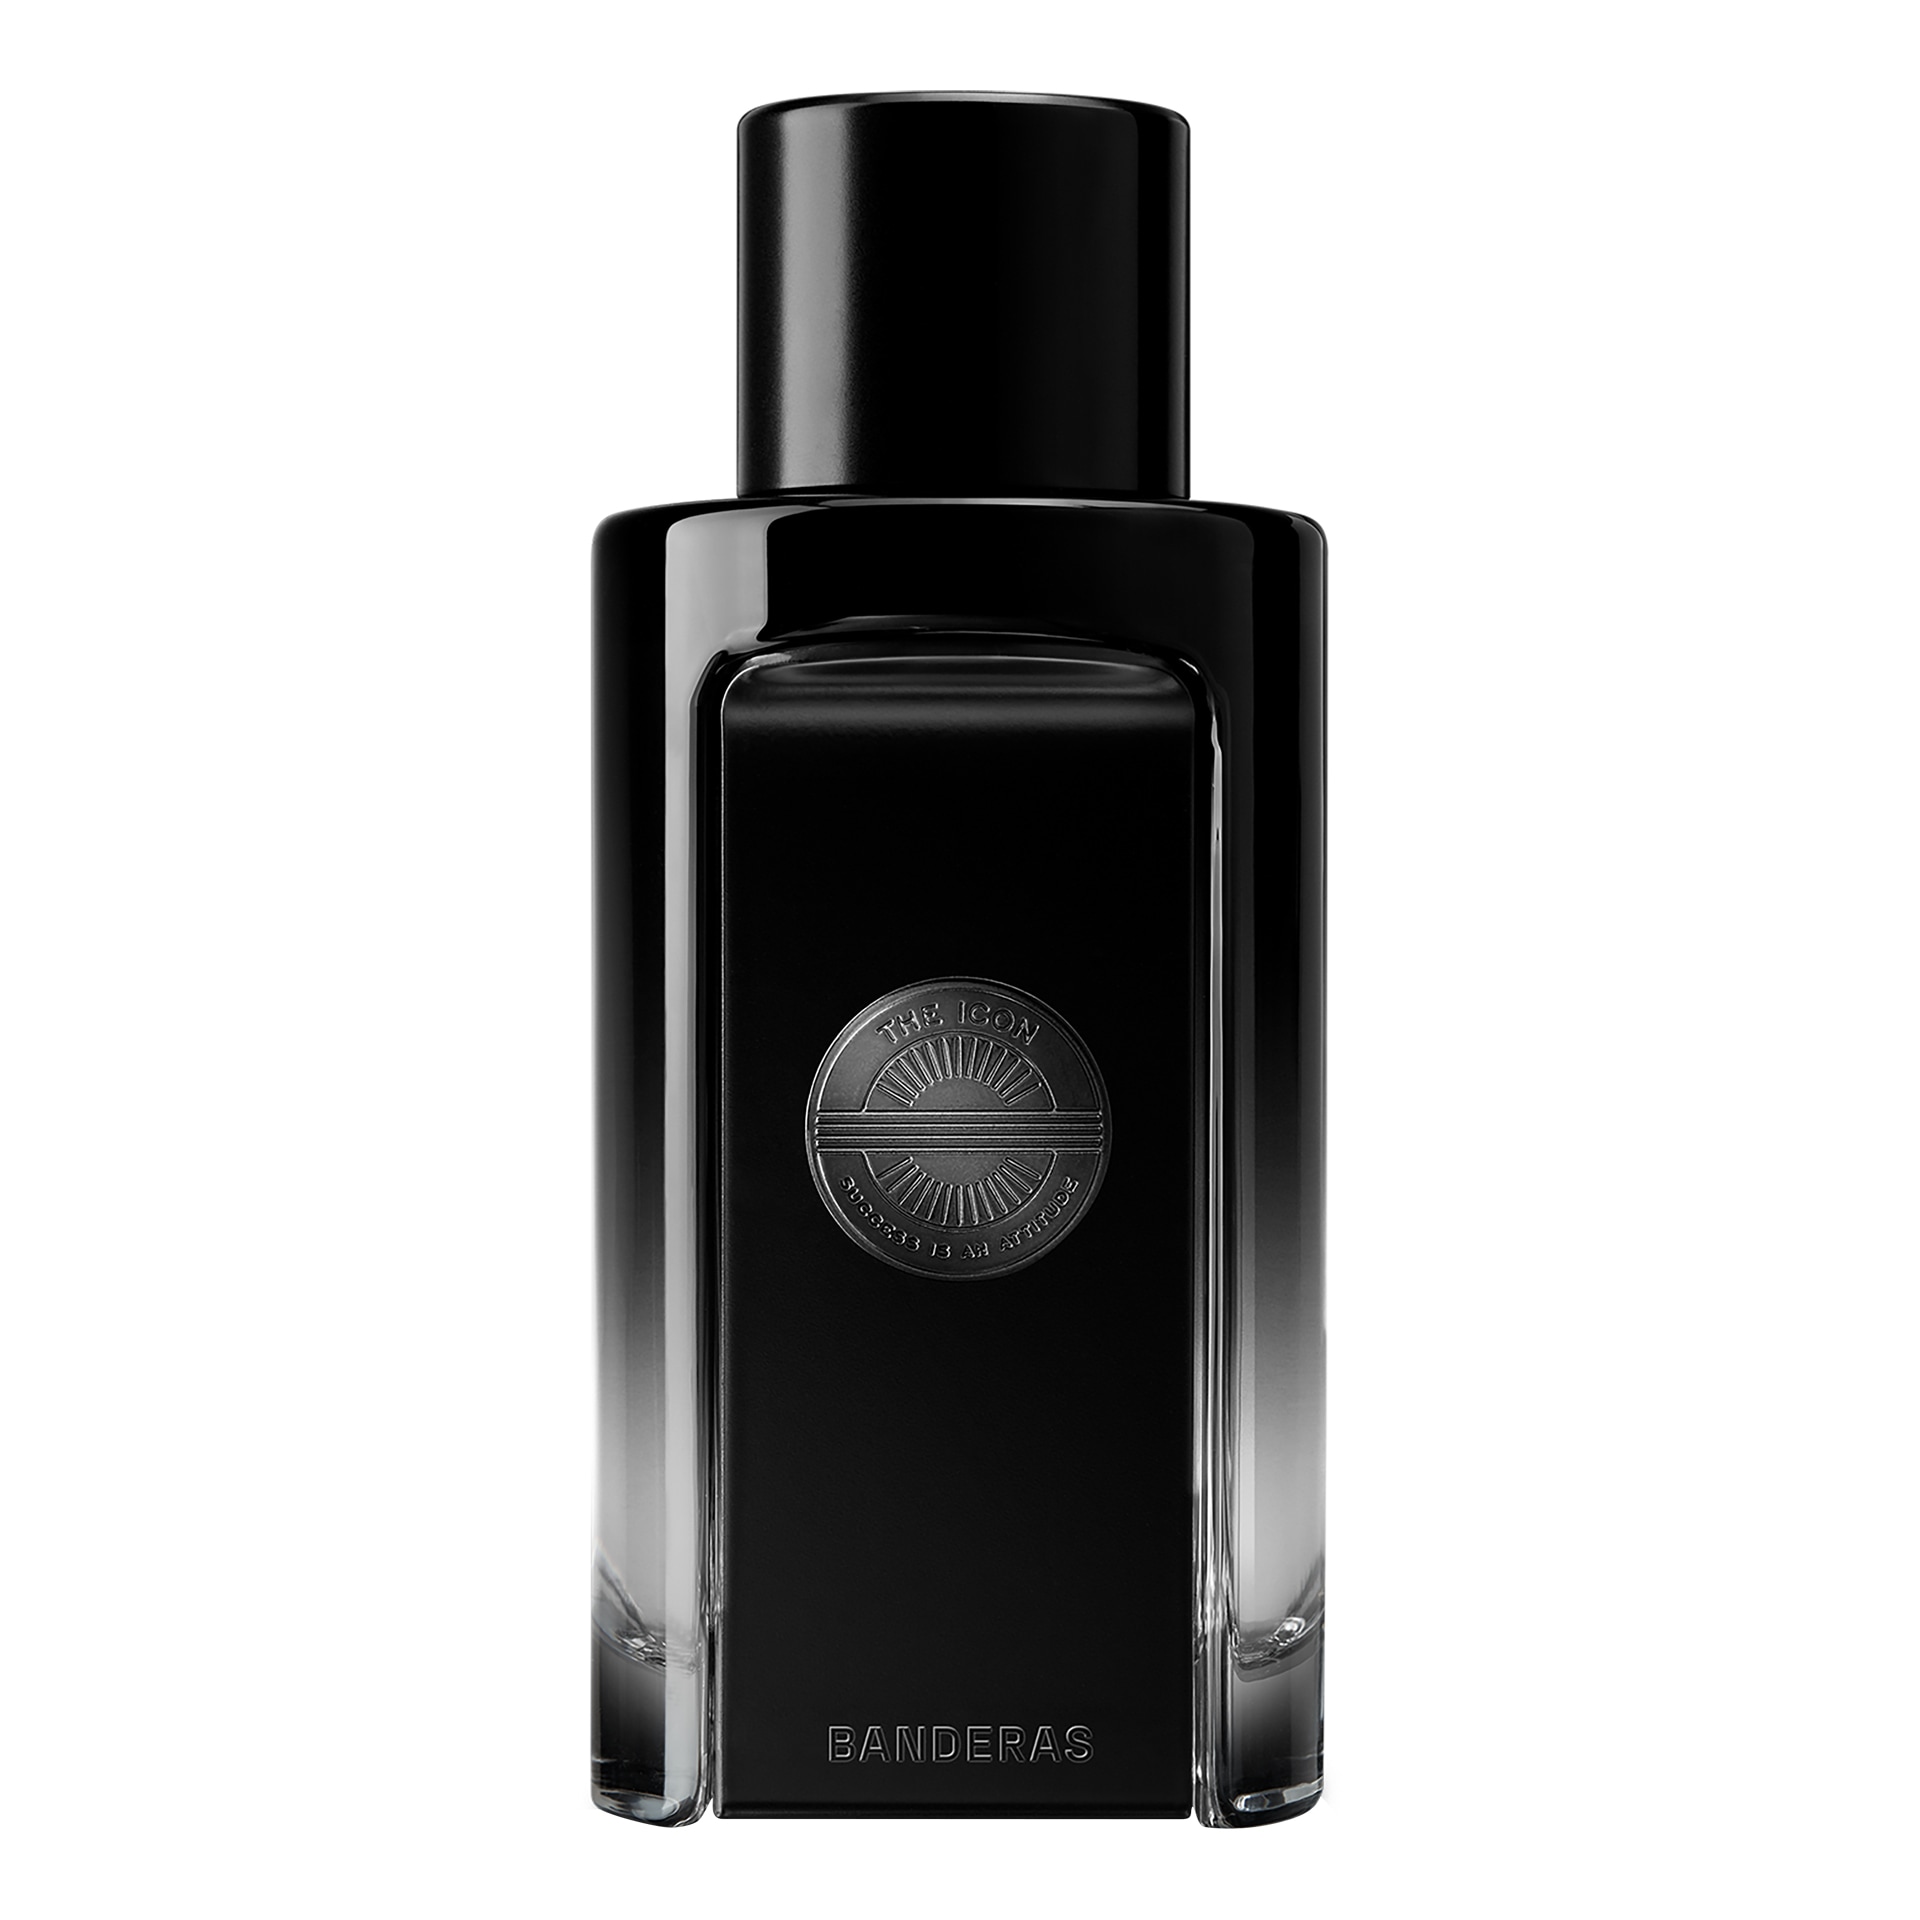 Вода парфюмерная Banderas The Icon Perfume, 100 мл antonio banderas the icon the perfume 50